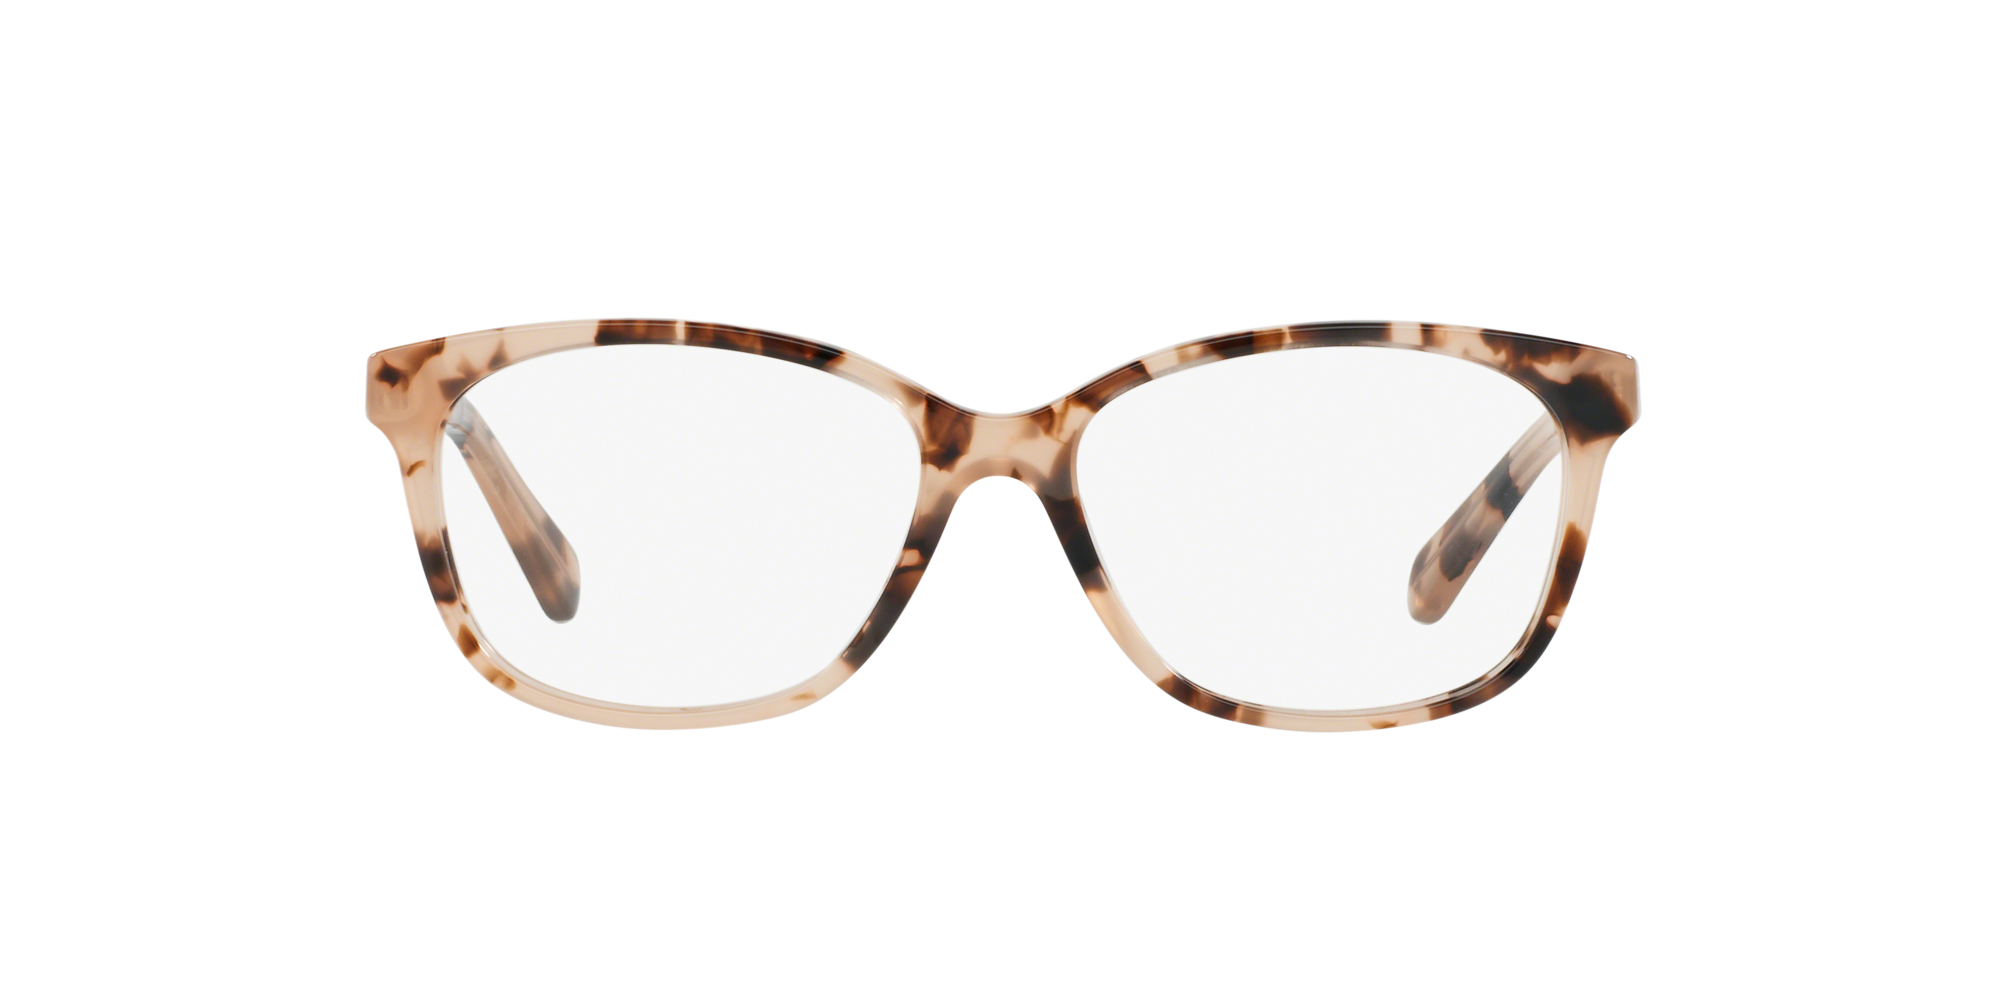 Michael Kors Matte BlackGold Eyeglasses  Glassescom  Free Shipping